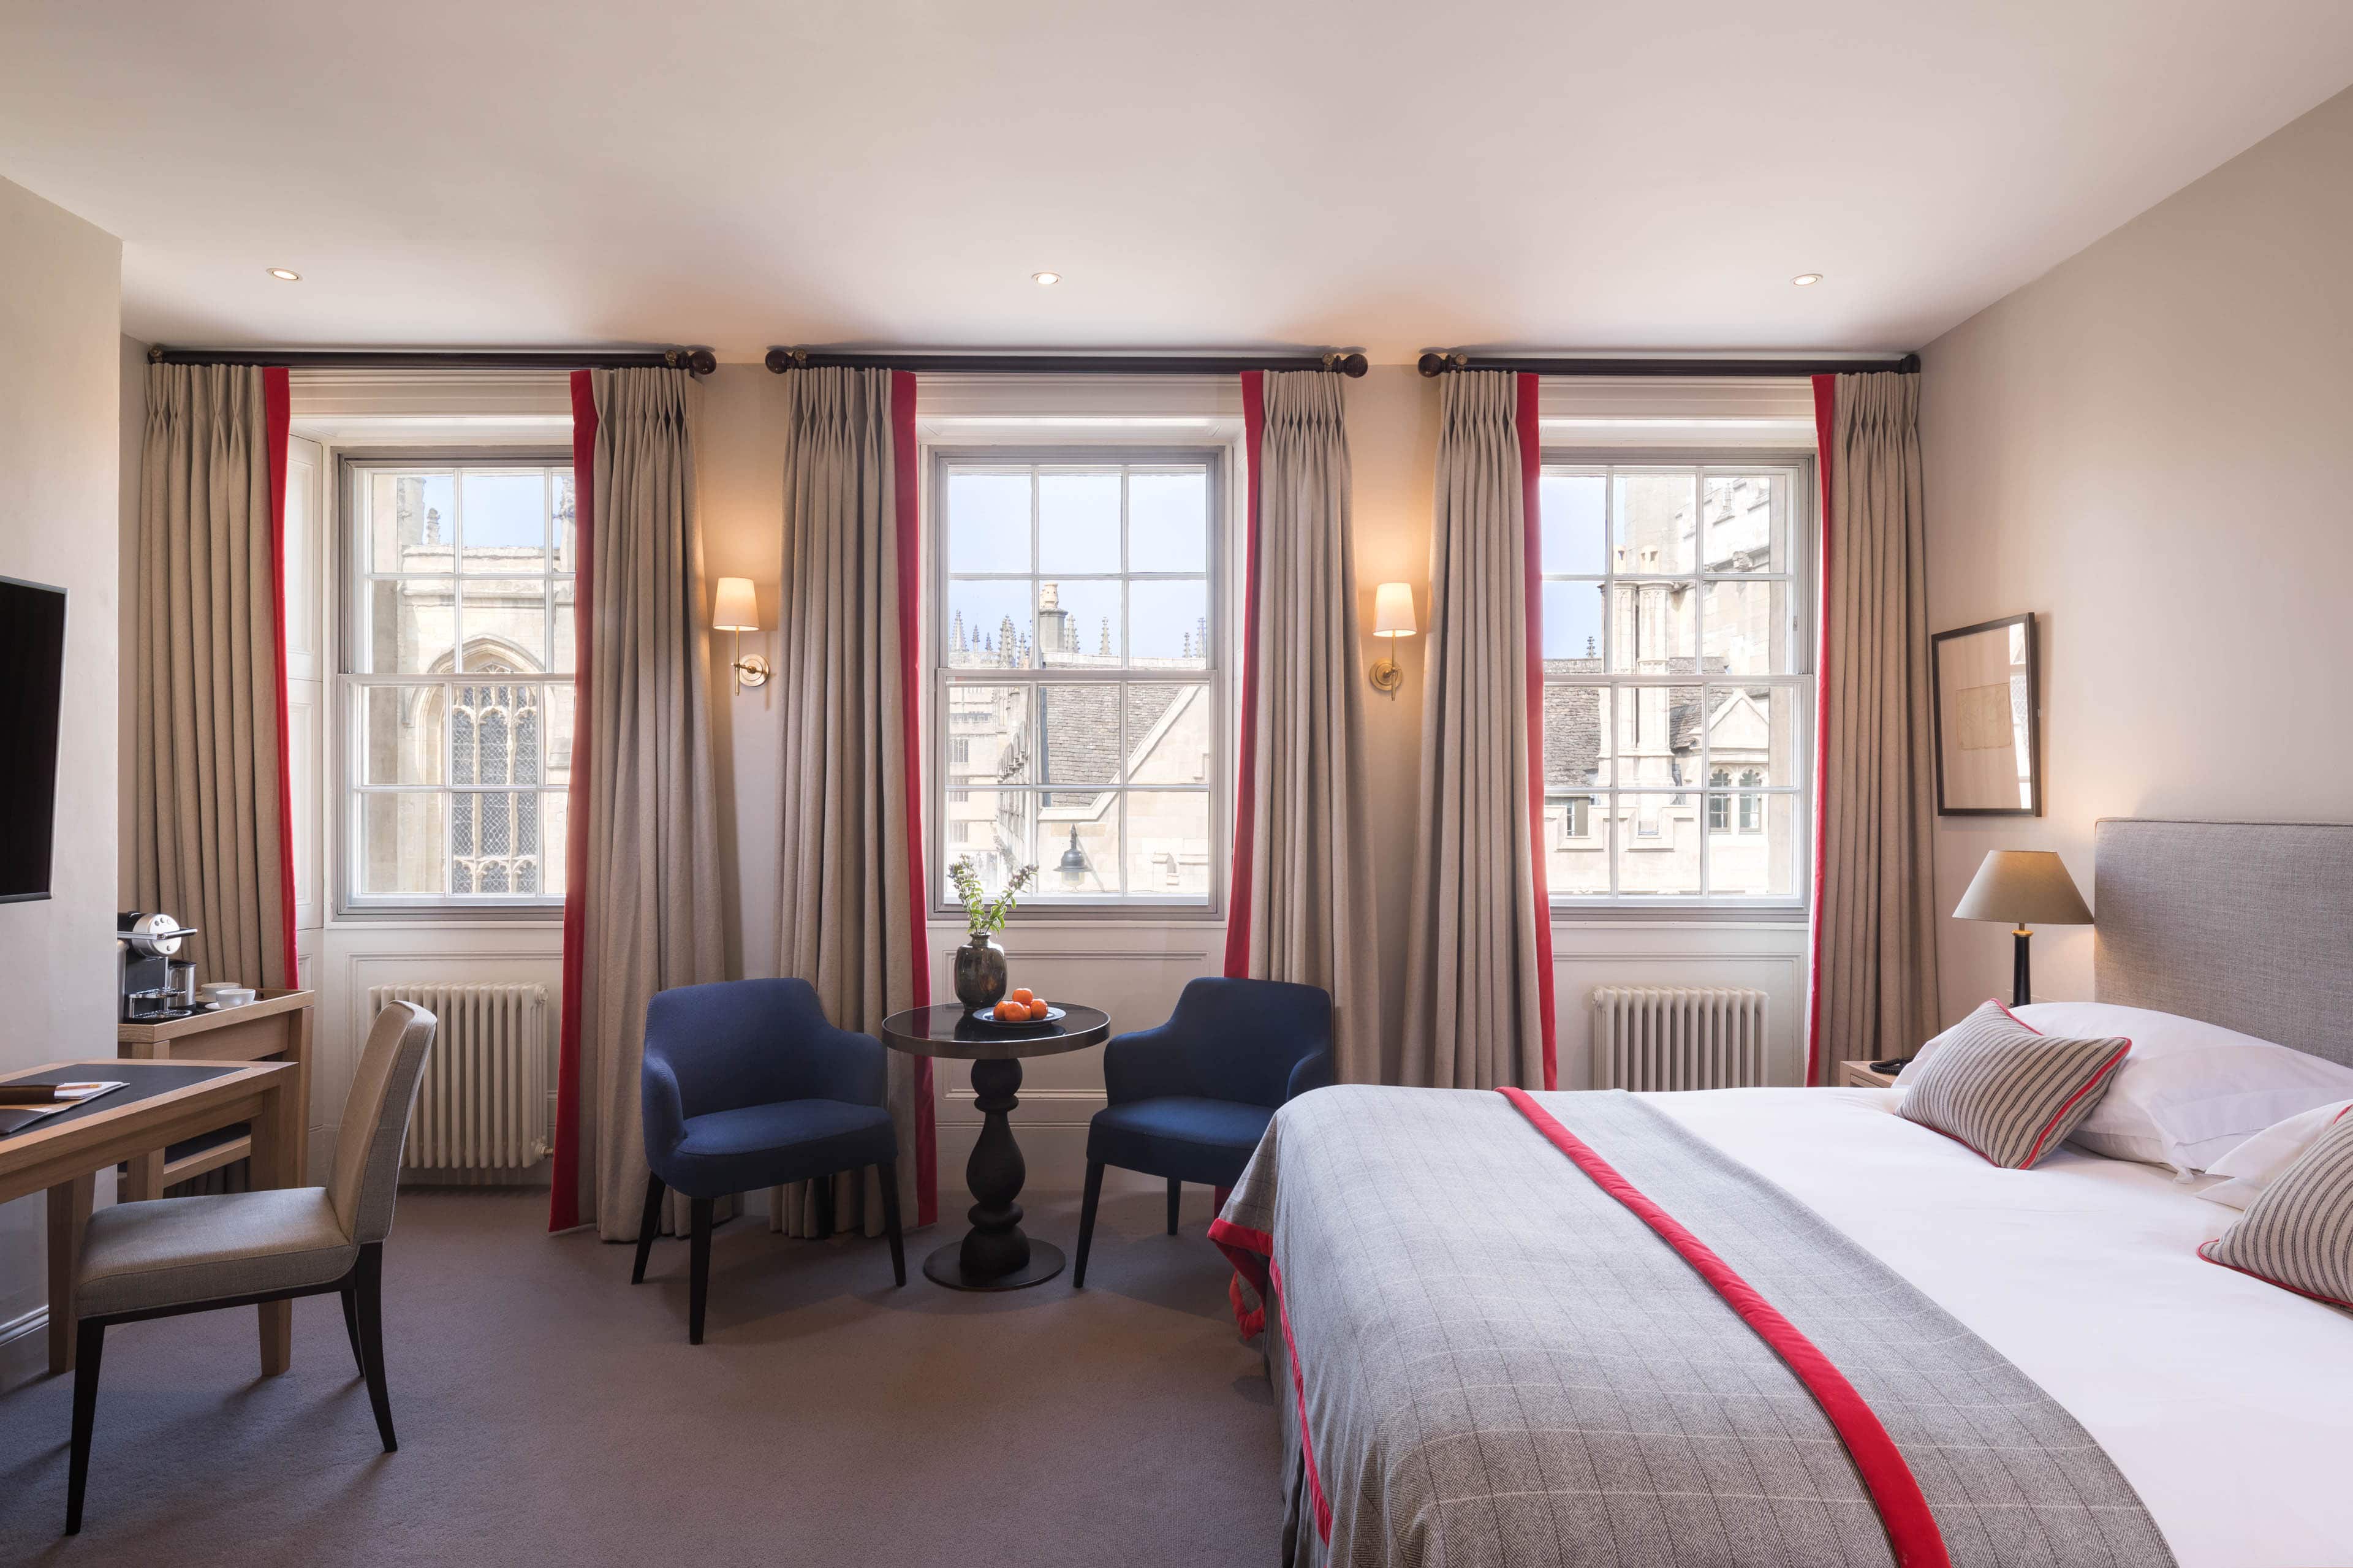 0002 - 2019 - Old Bank Hotel - Oxford - High Res - Bedroom Modern Windows High Street View - Web Hero